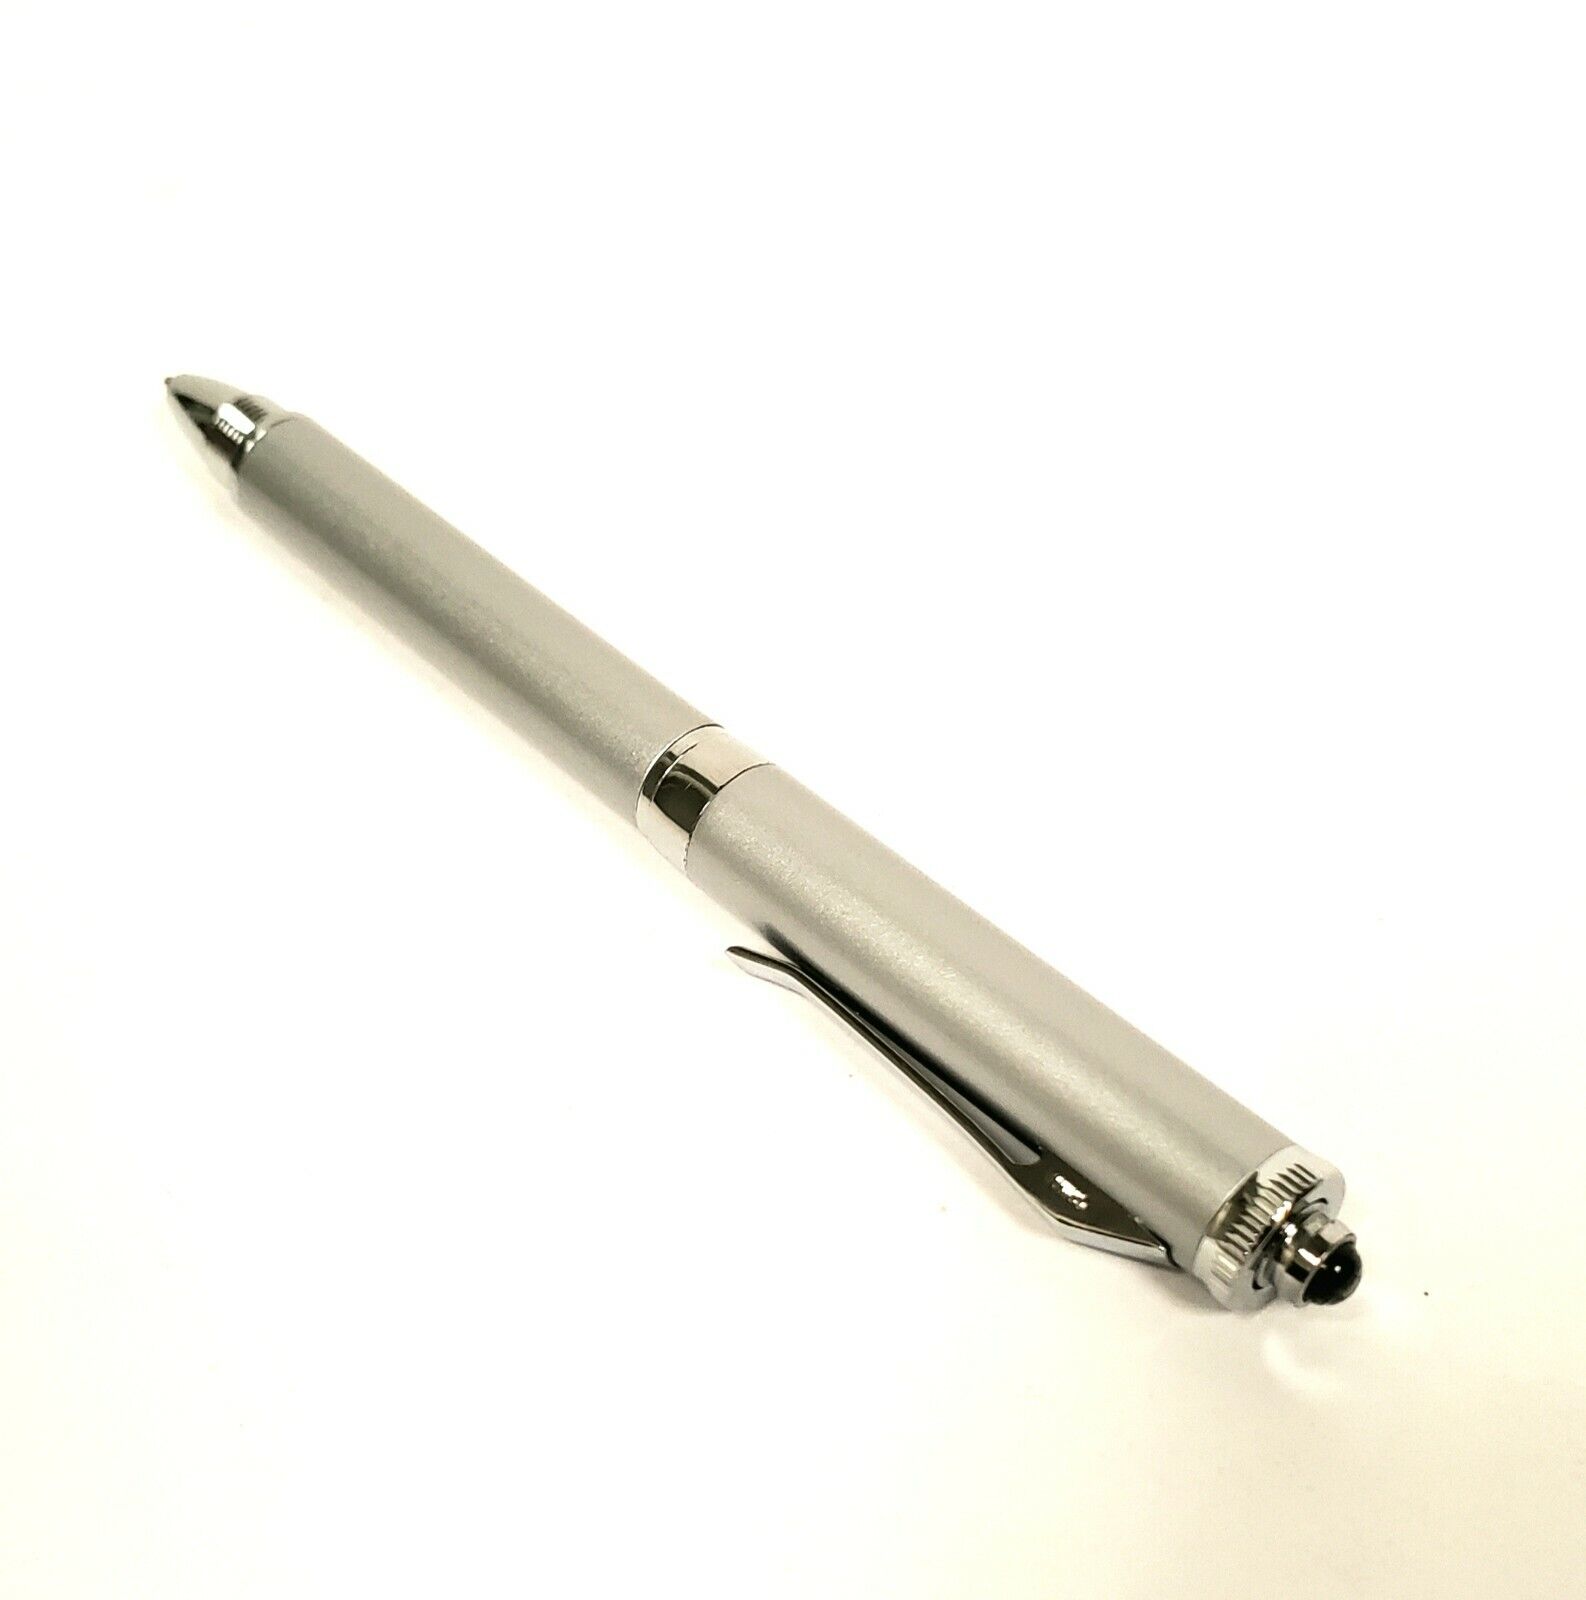 Lot of 50 Pens - Intelligent Triple function Light-Up LED Pens w/ Stylus -Silver